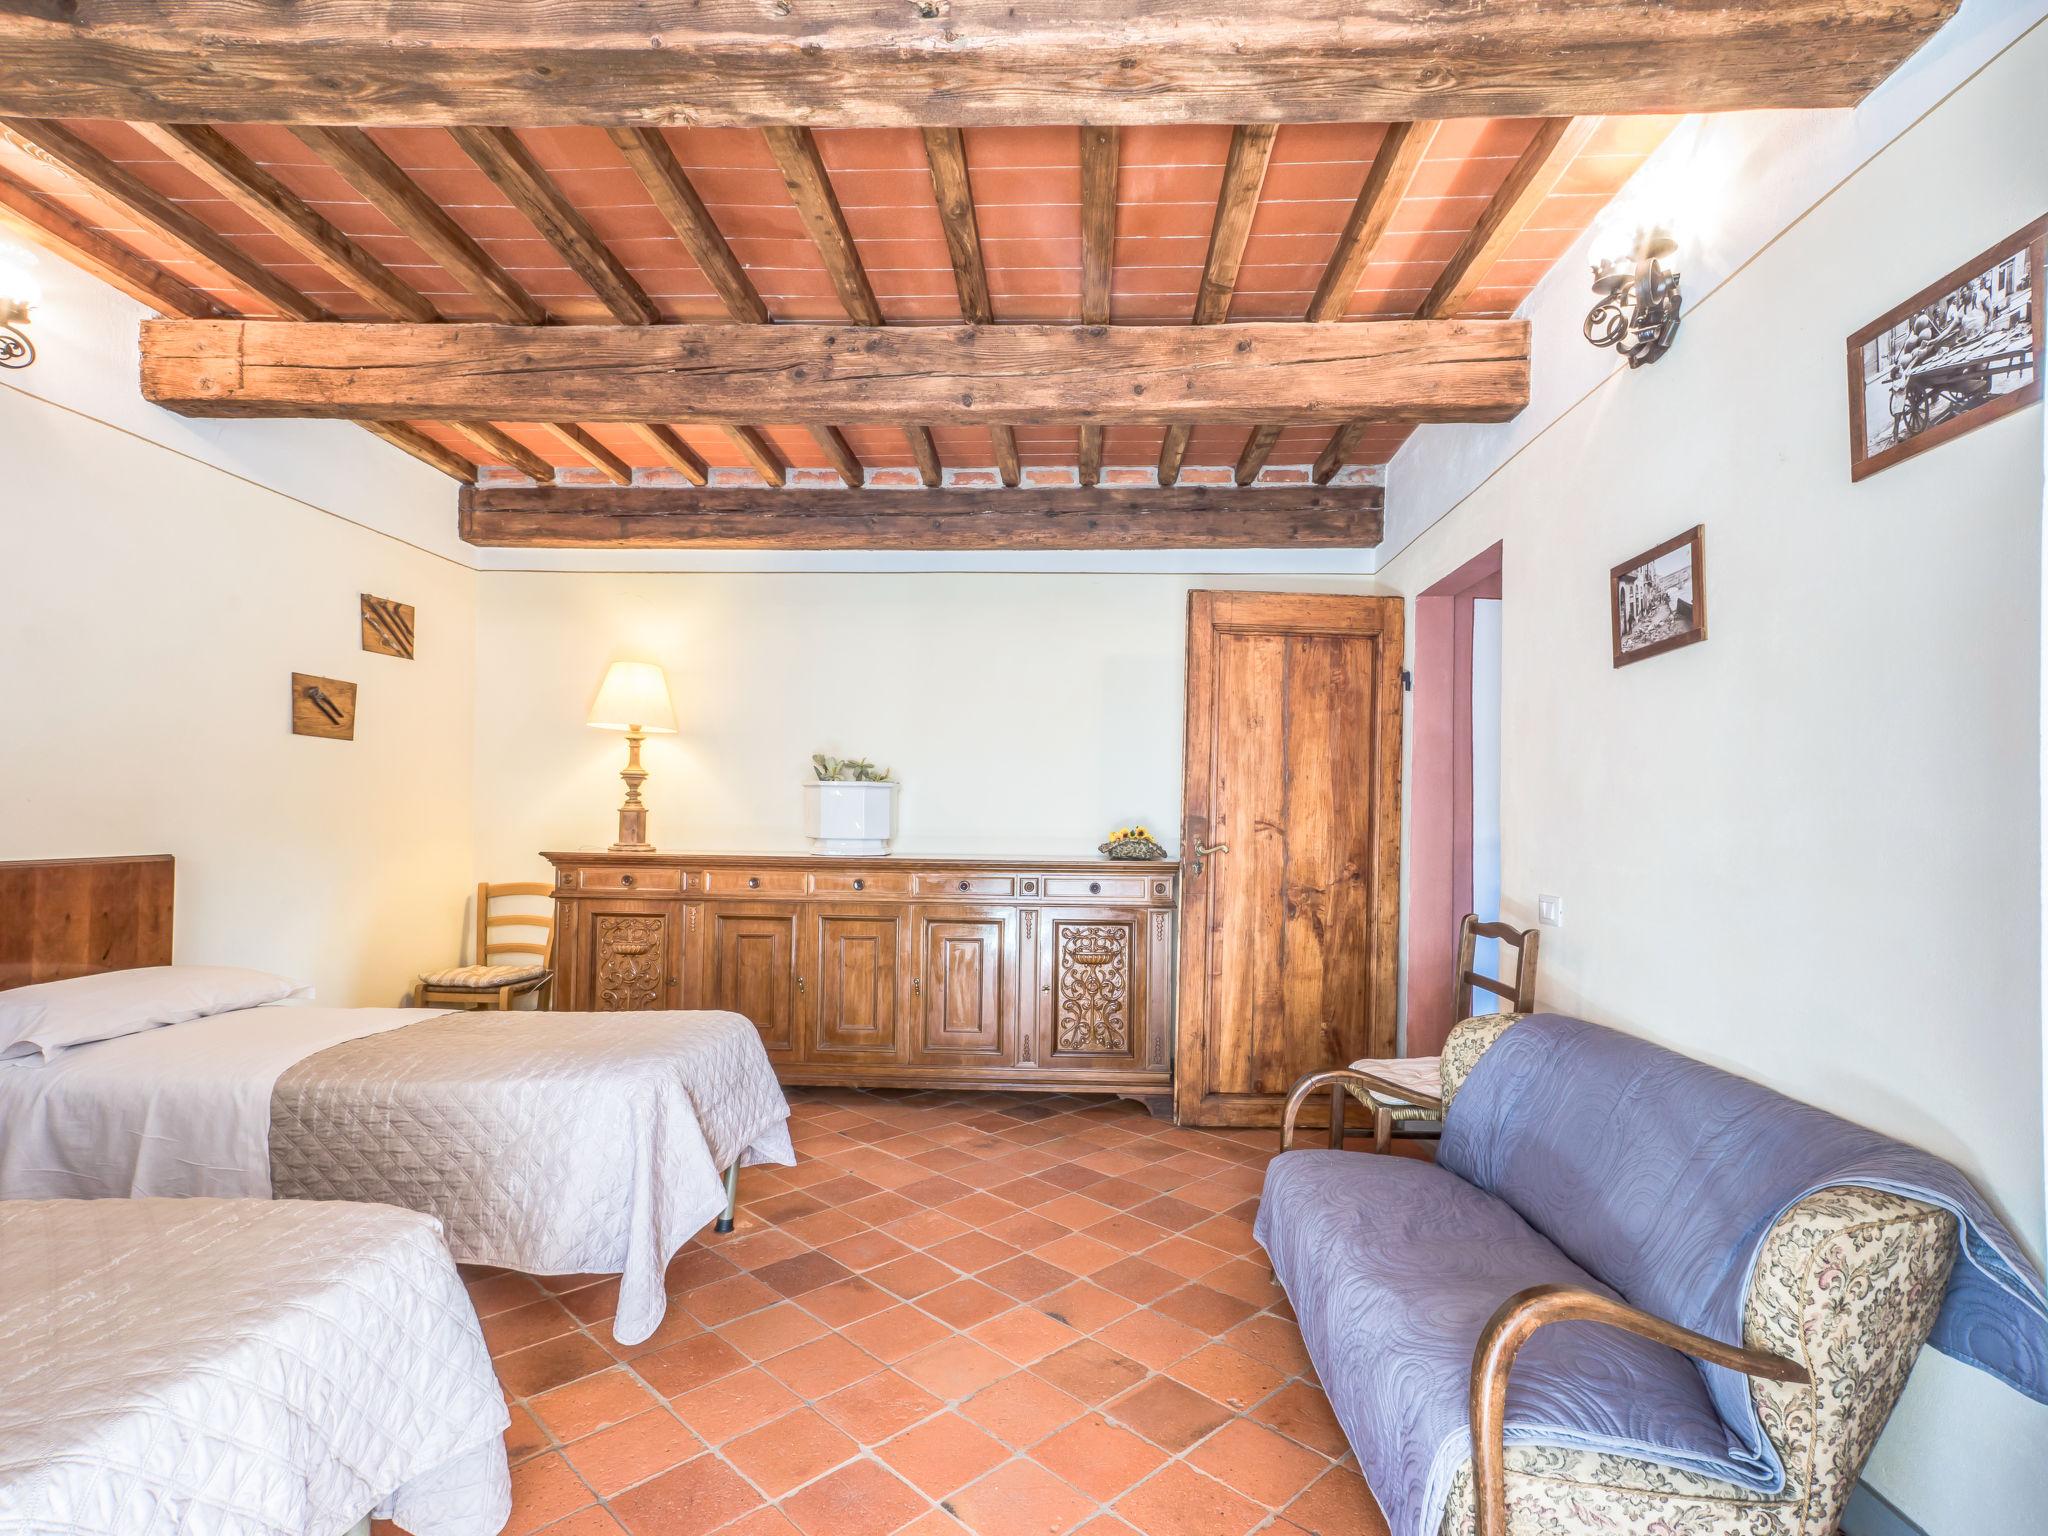 Photo 16 - 7 bedroom House in Barberino di Mugello with private pool and garden